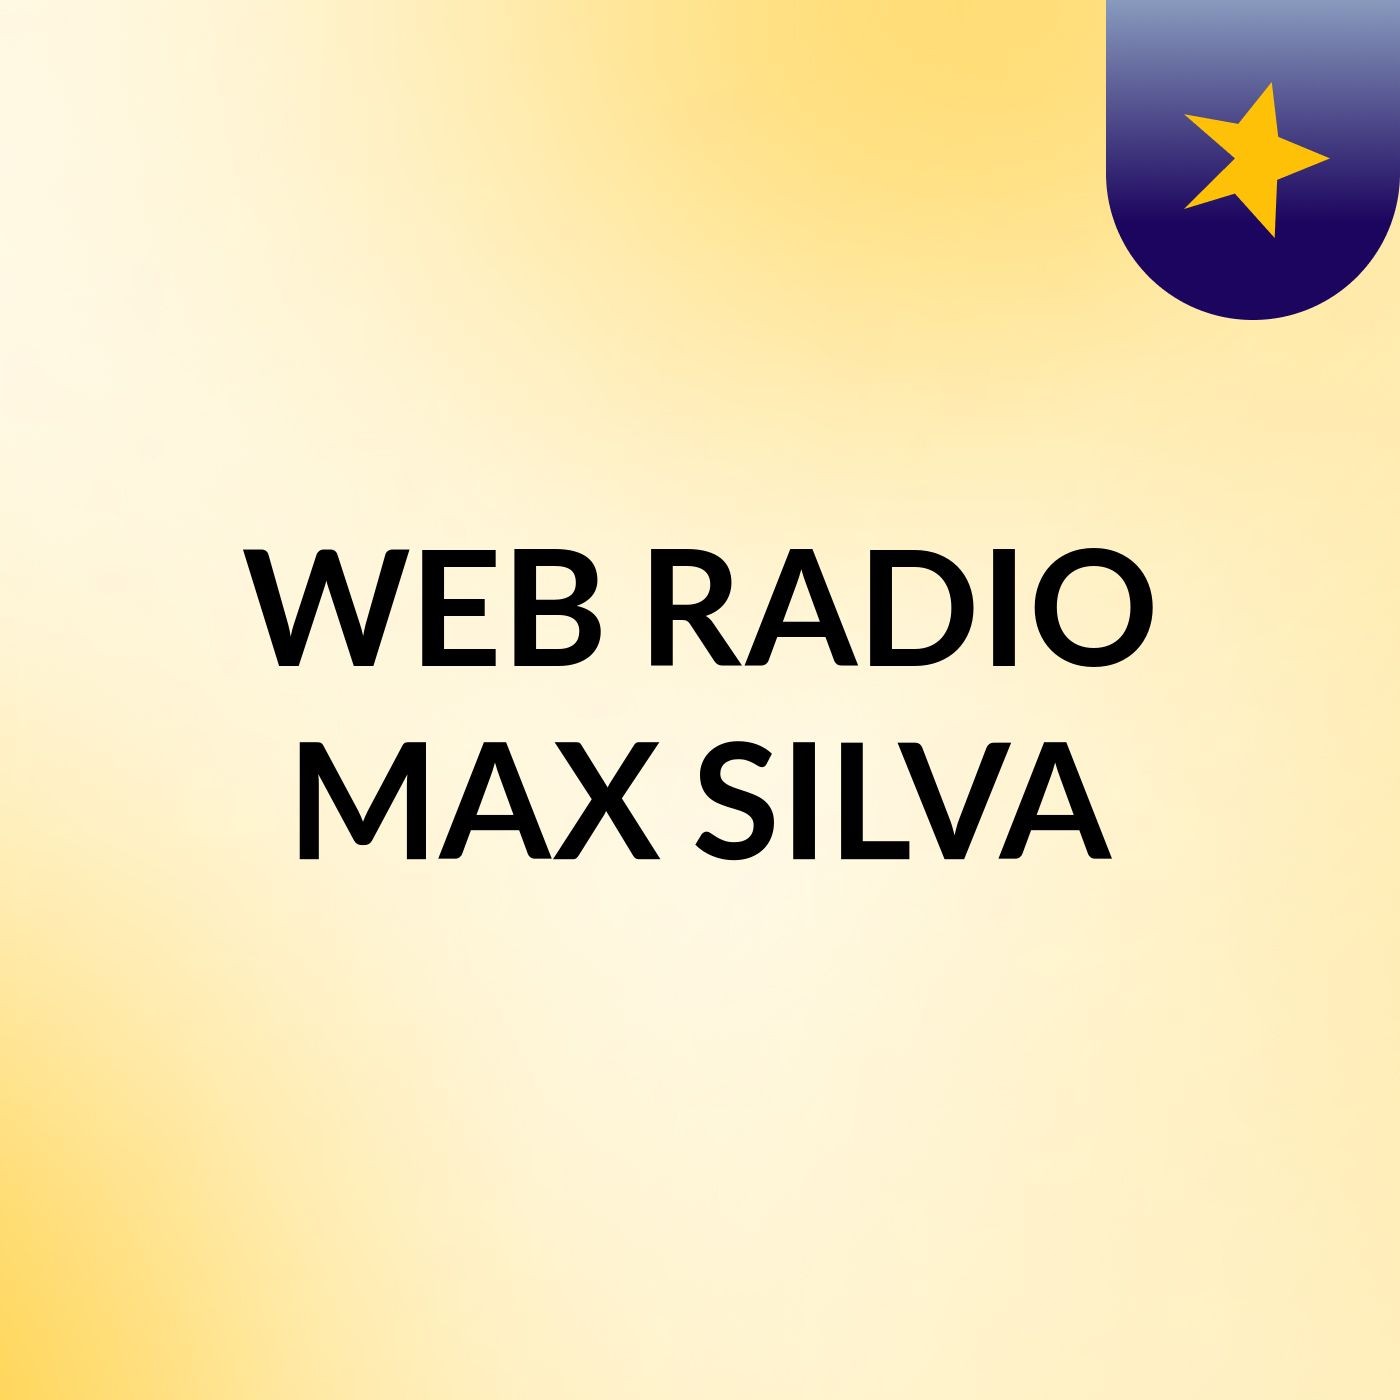 WEB RADIO MAX SILVA